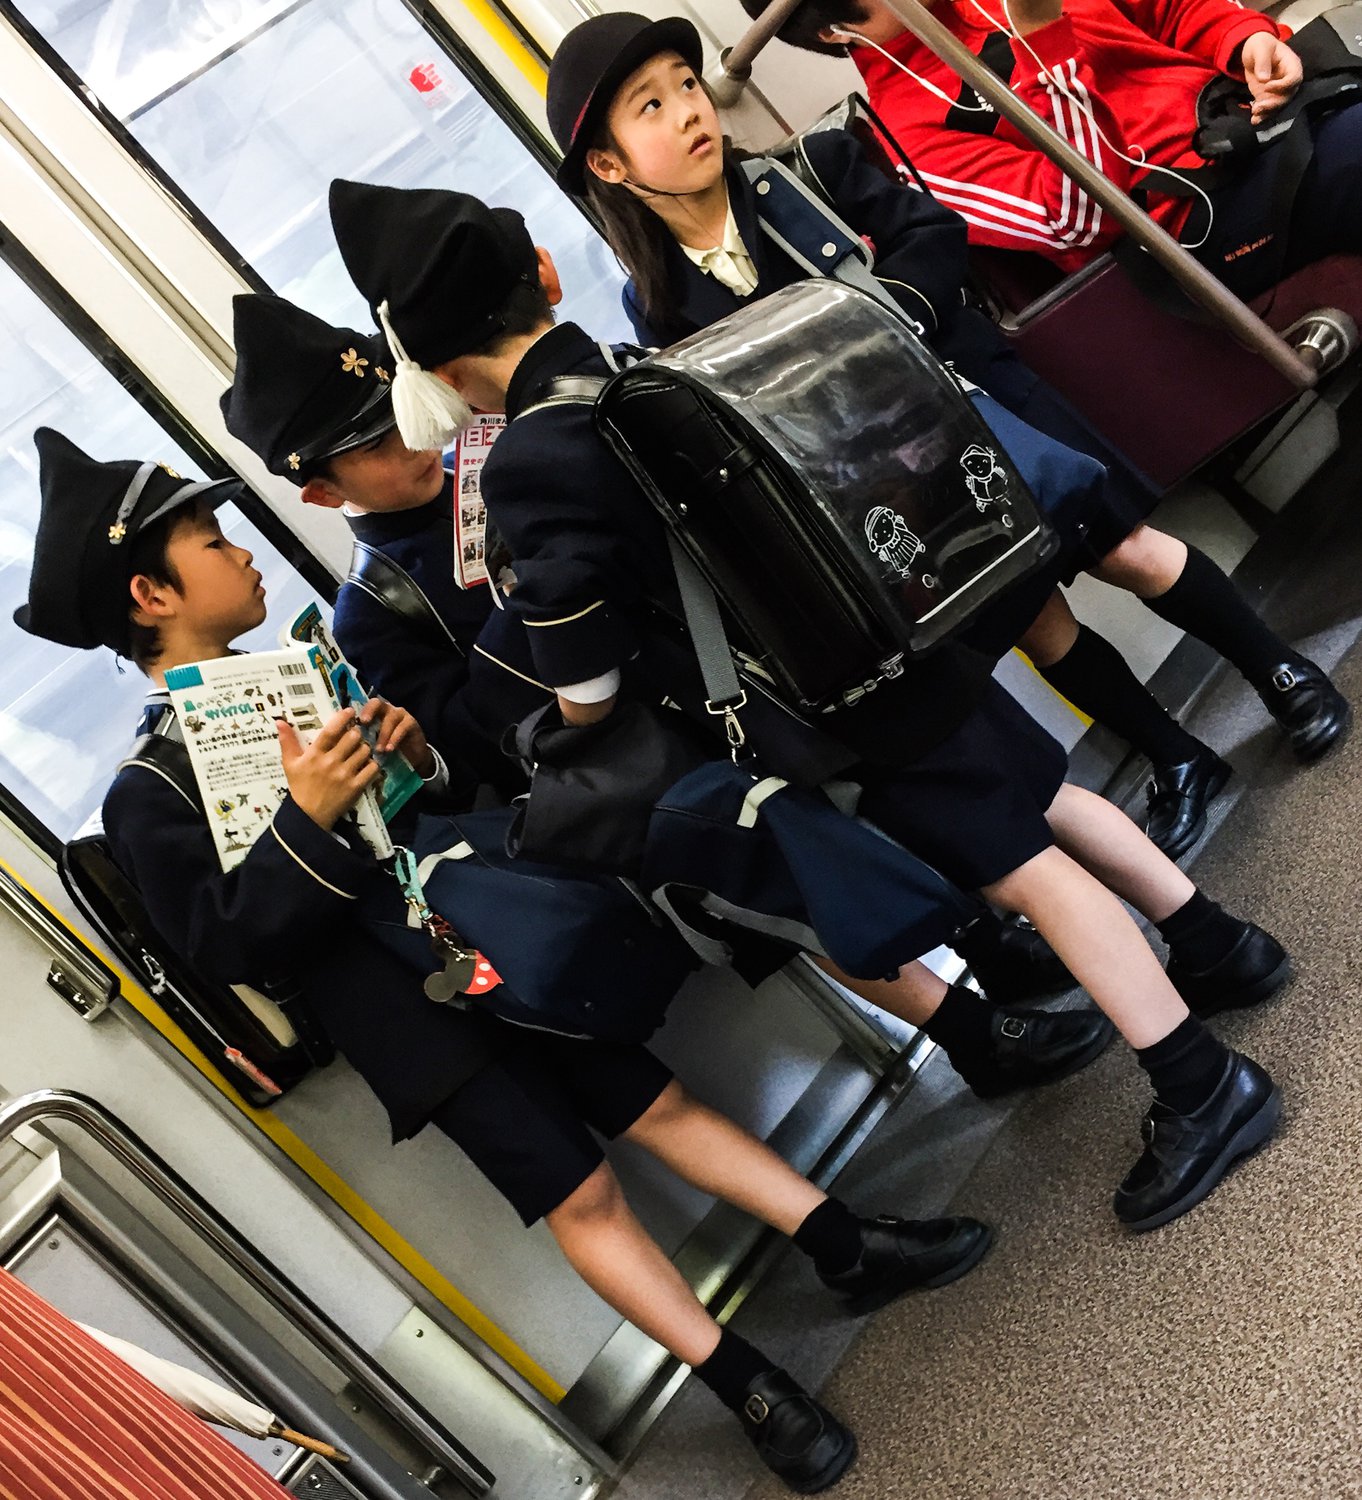 Kids reading manga after school.